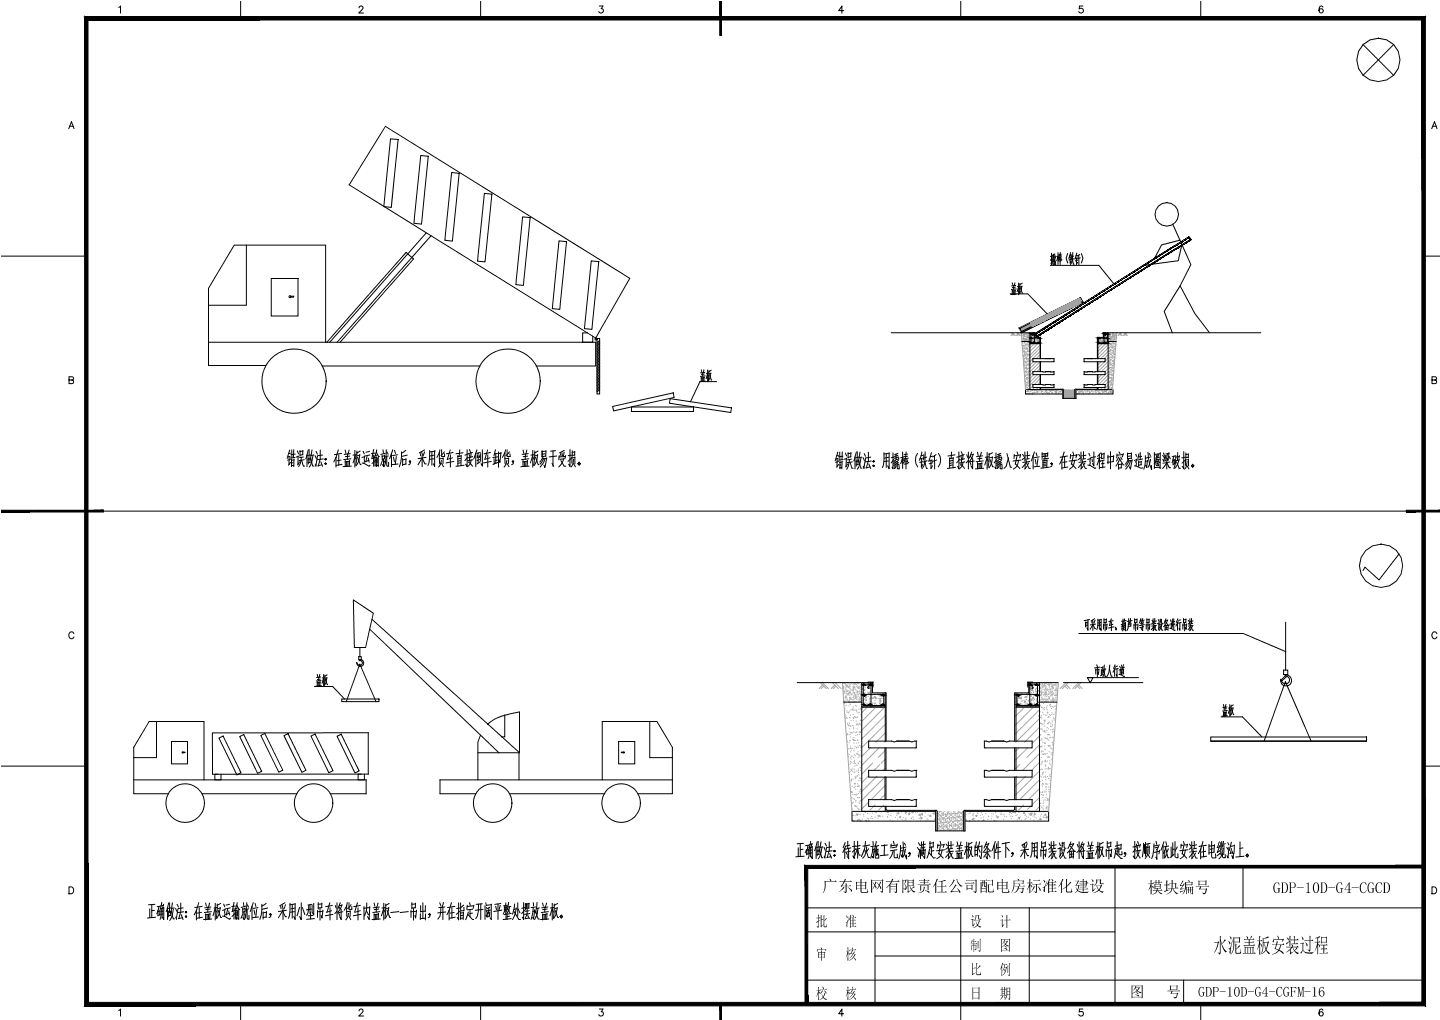 GDP-10D-G4-CGFM-16水泥盖板安装过程图